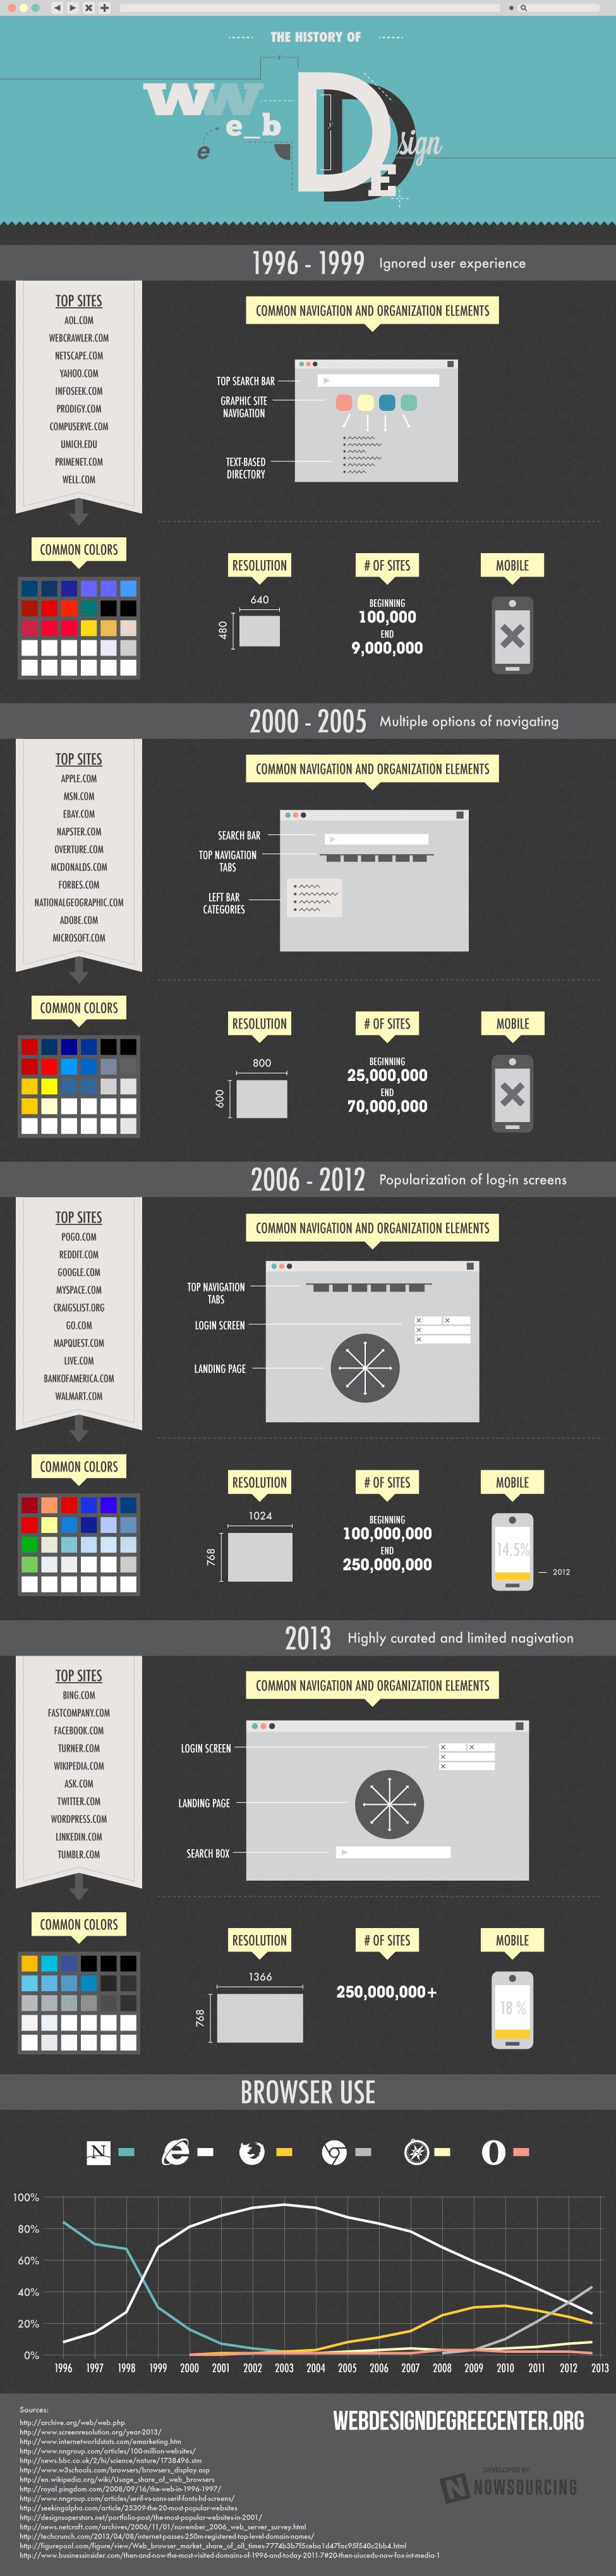 Web-Design-History-Timeline-Infographic